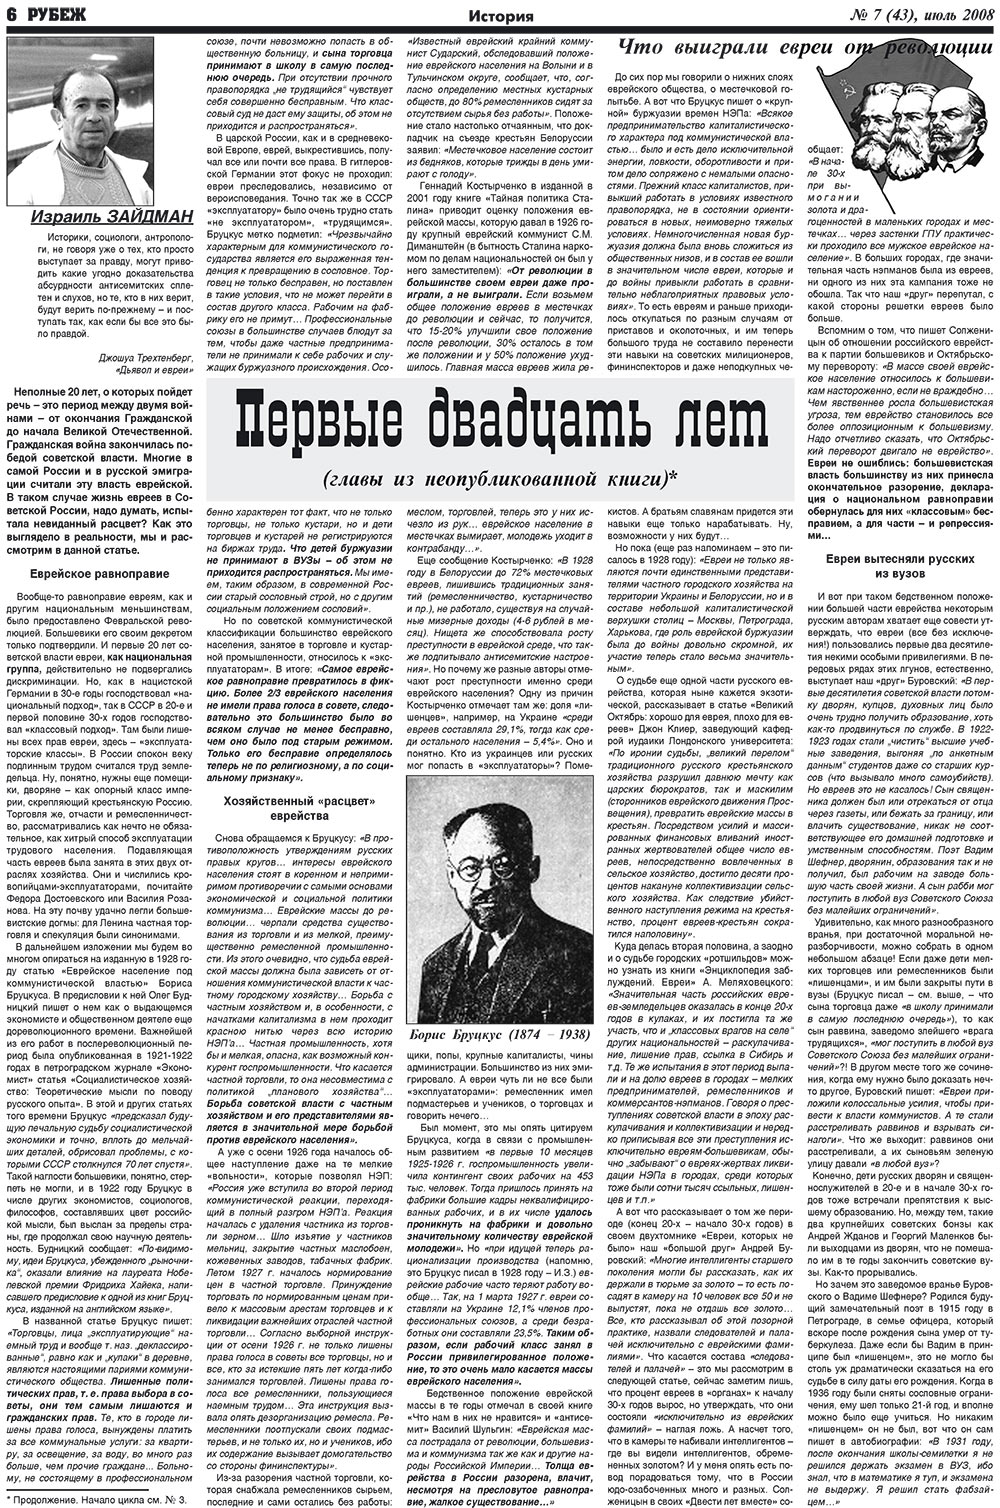 Рубеж, газета. 2008 №7 стр.6